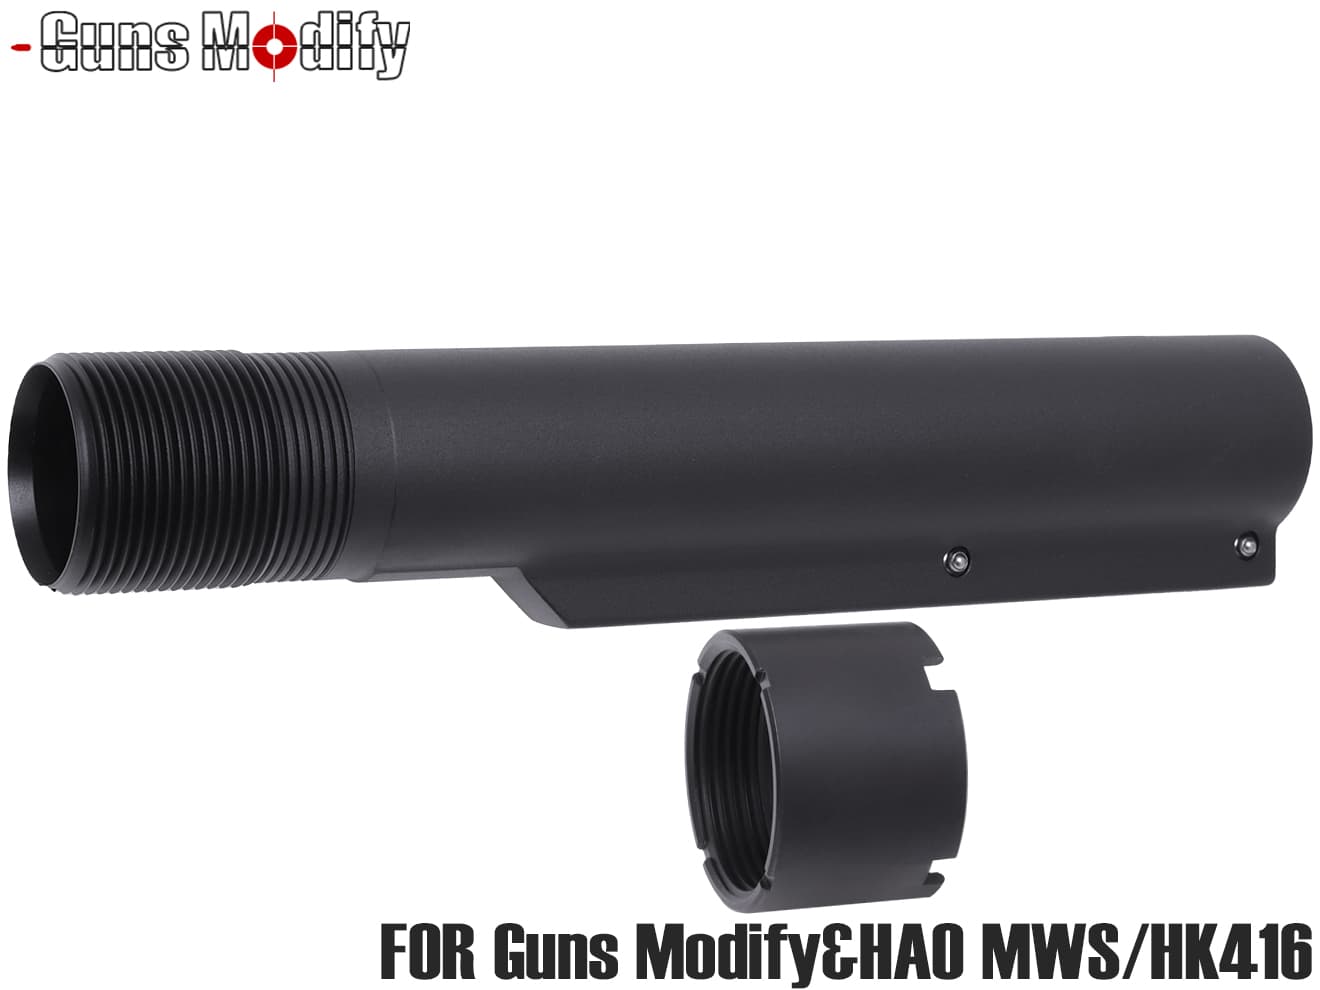 Guns Modify HK416A5 アルミCNC MIL-SPEC バッファチューブ for GM/HAO GBB M4 MWS◆ストックパイプ ガスブロ ガス カスタム 強化 パーツ ワンピース ボディ 強度